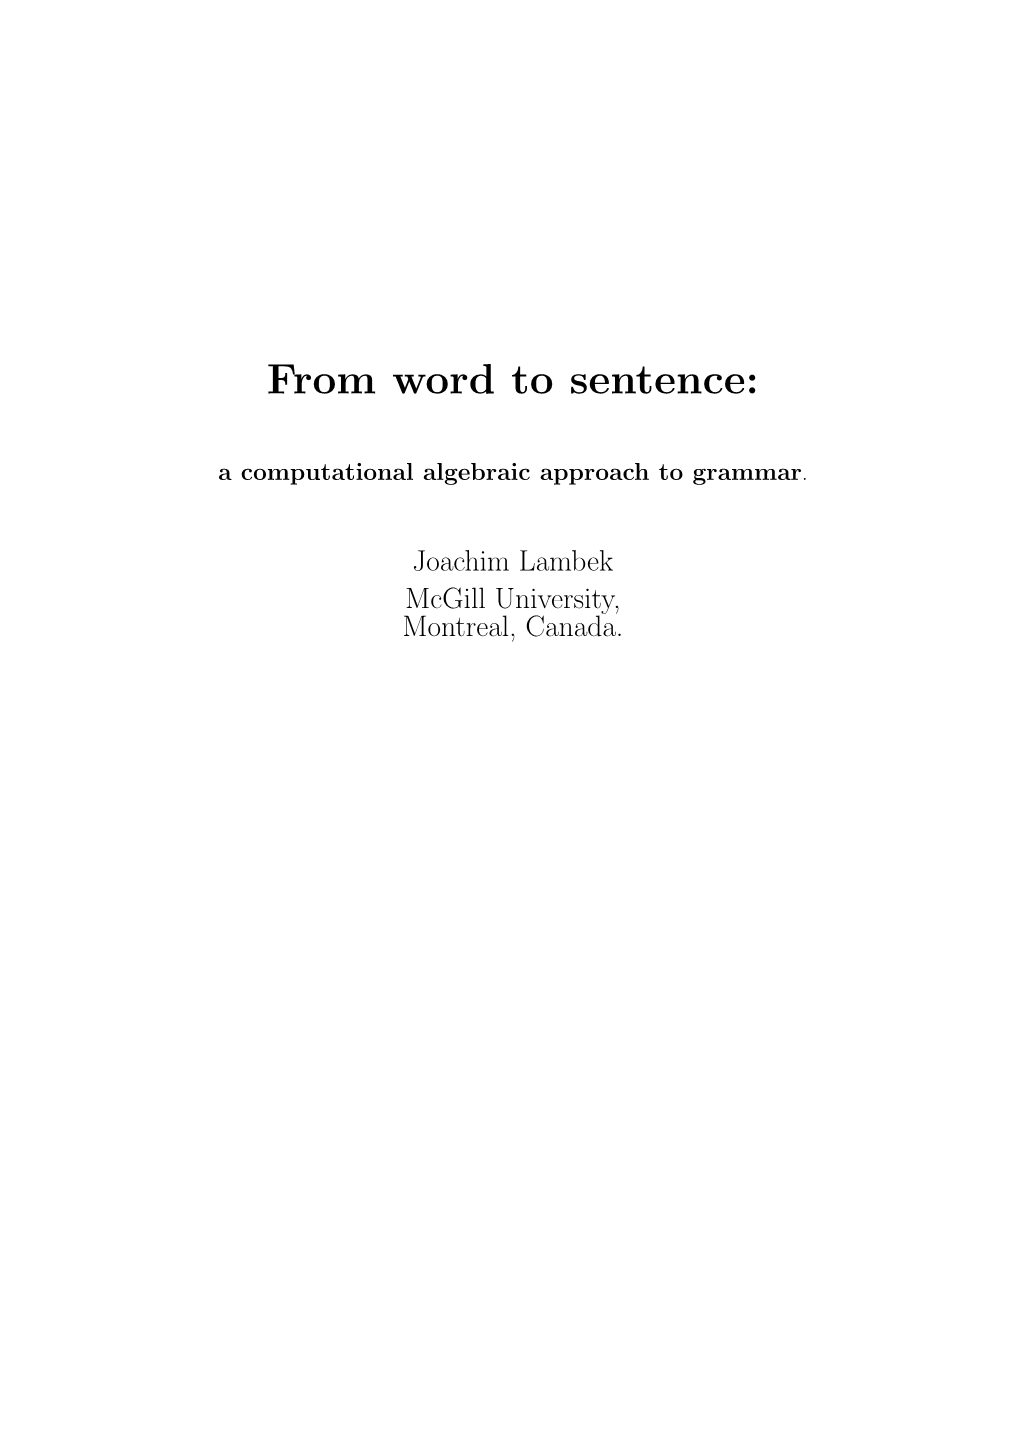 From Word to Sentence: a Computational Algebraic Approach to Grammar